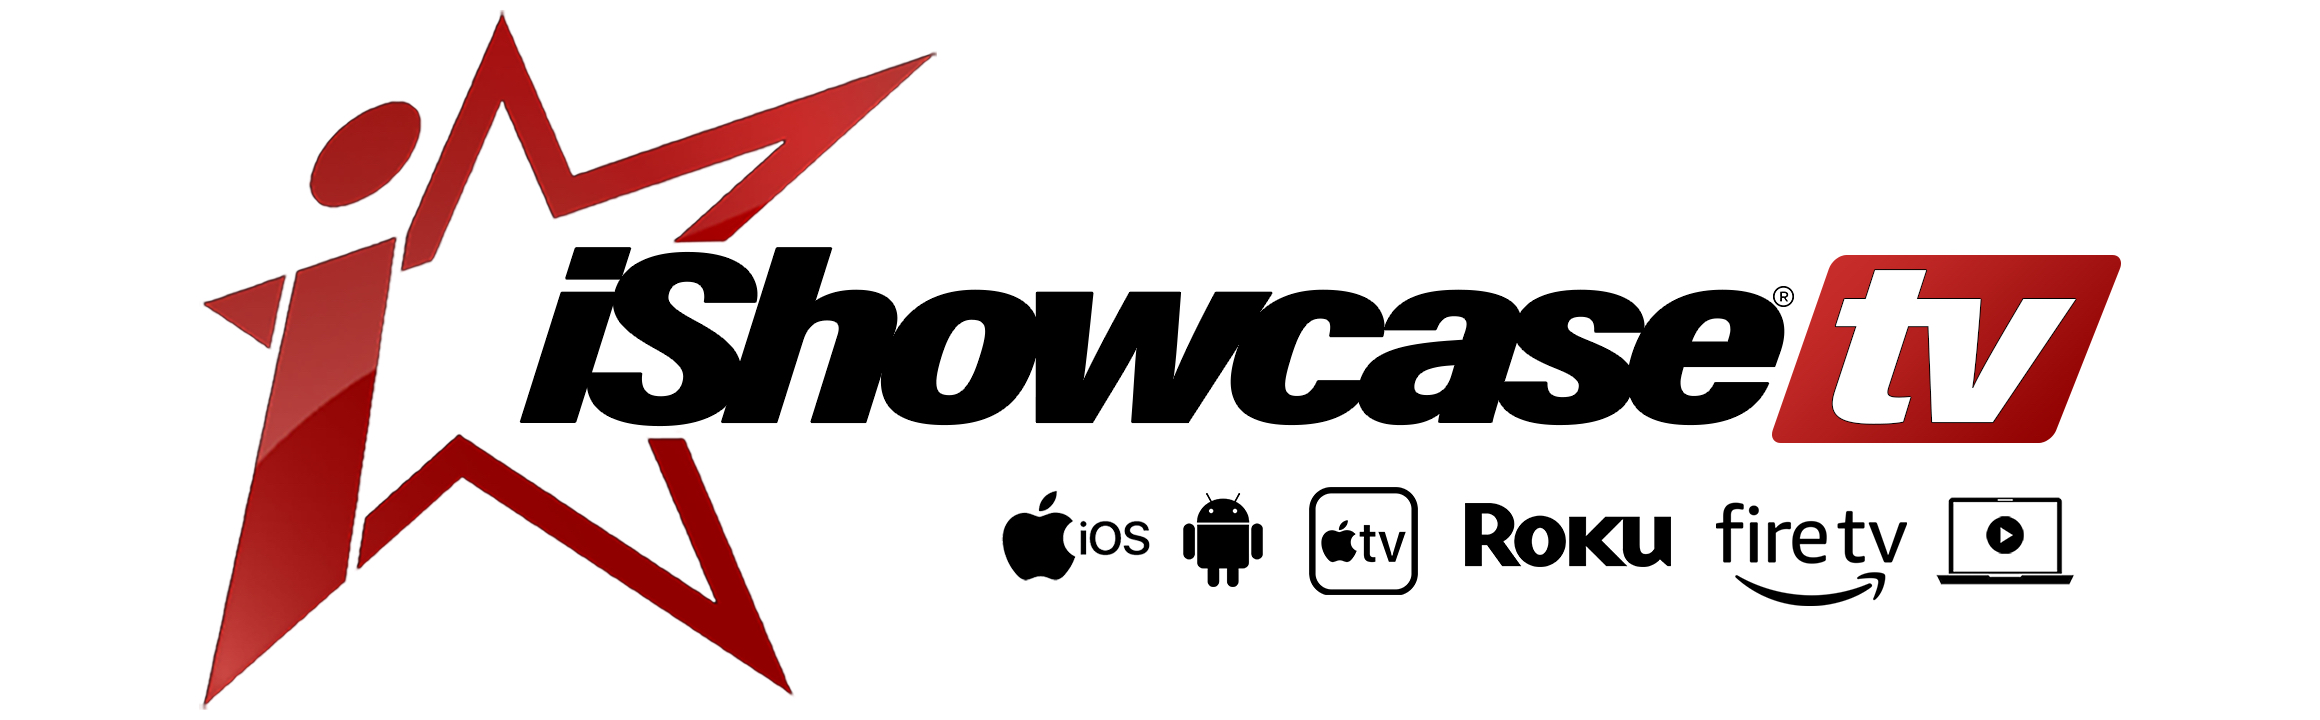 iShowcaseTV offers diverse original content in different genres